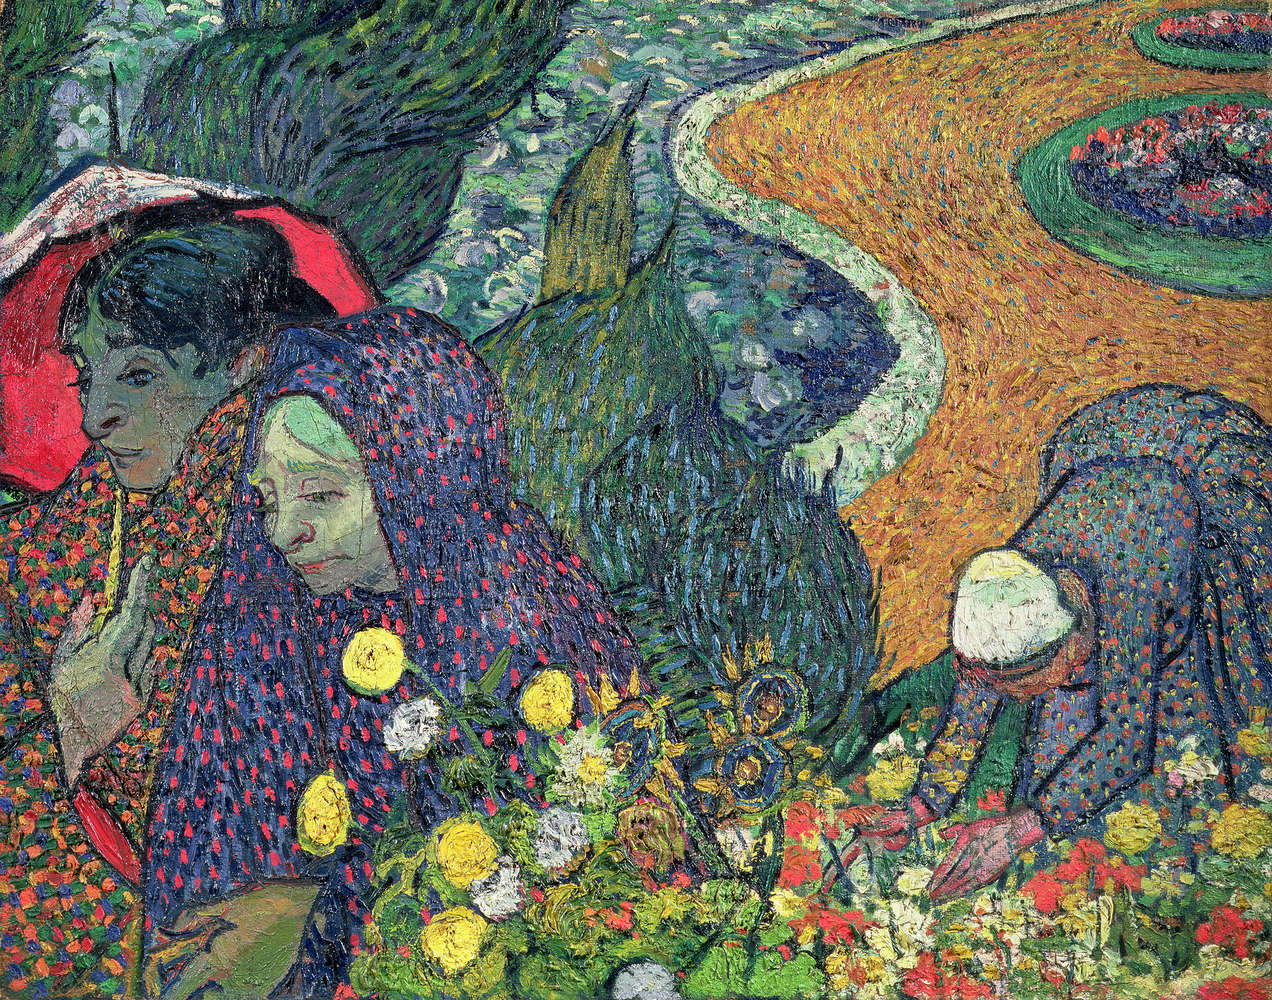             Fototapete "Spaziergang Arles" von Vincent van Gogh
        